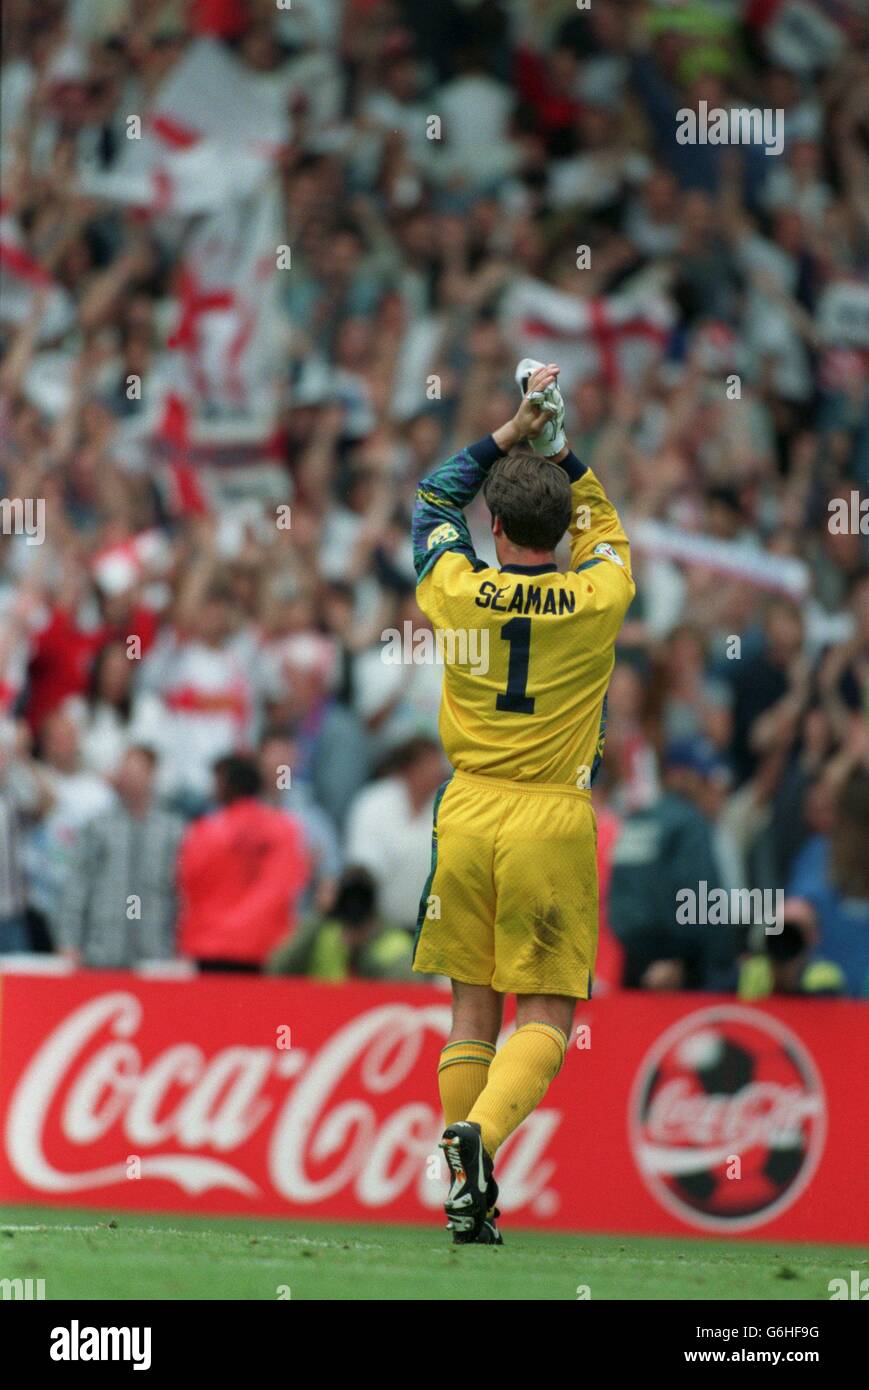 22-JUN-96 ..England / Spanien ... Englands David Seaman begrüßt die Menge Stockfoto